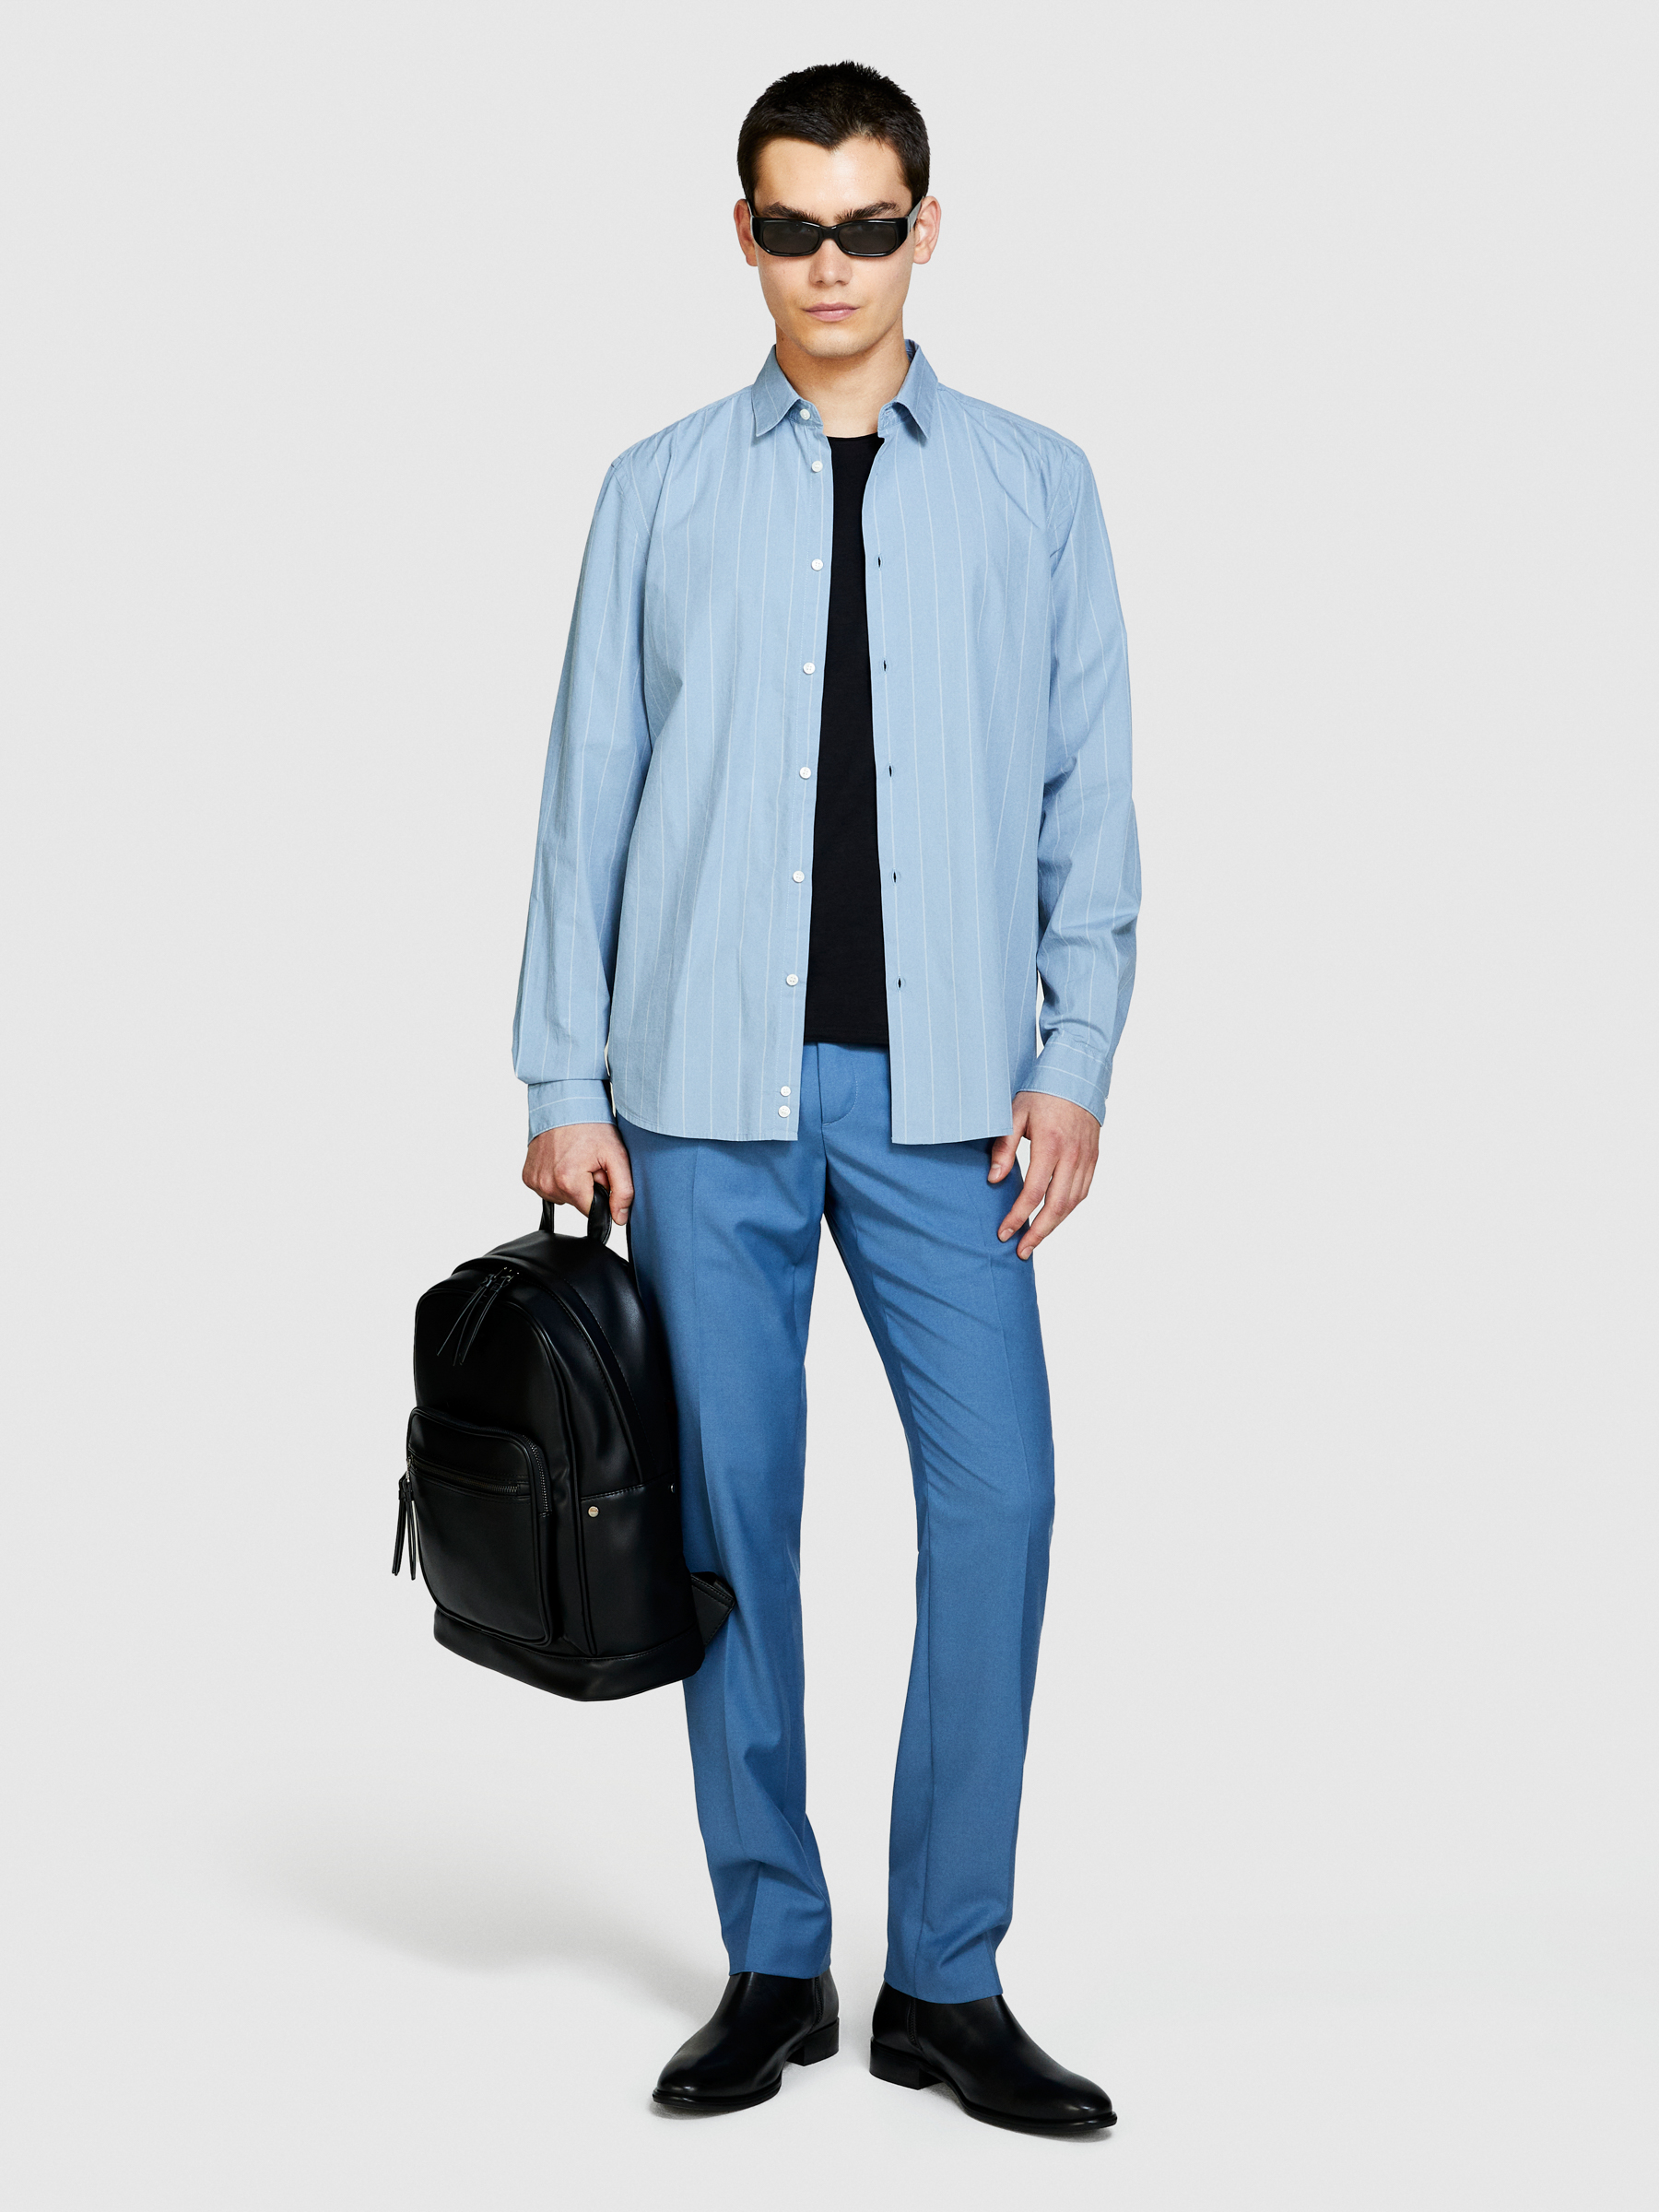 Sisley - Striped Shirt, Man, Light Blue, Size: 46